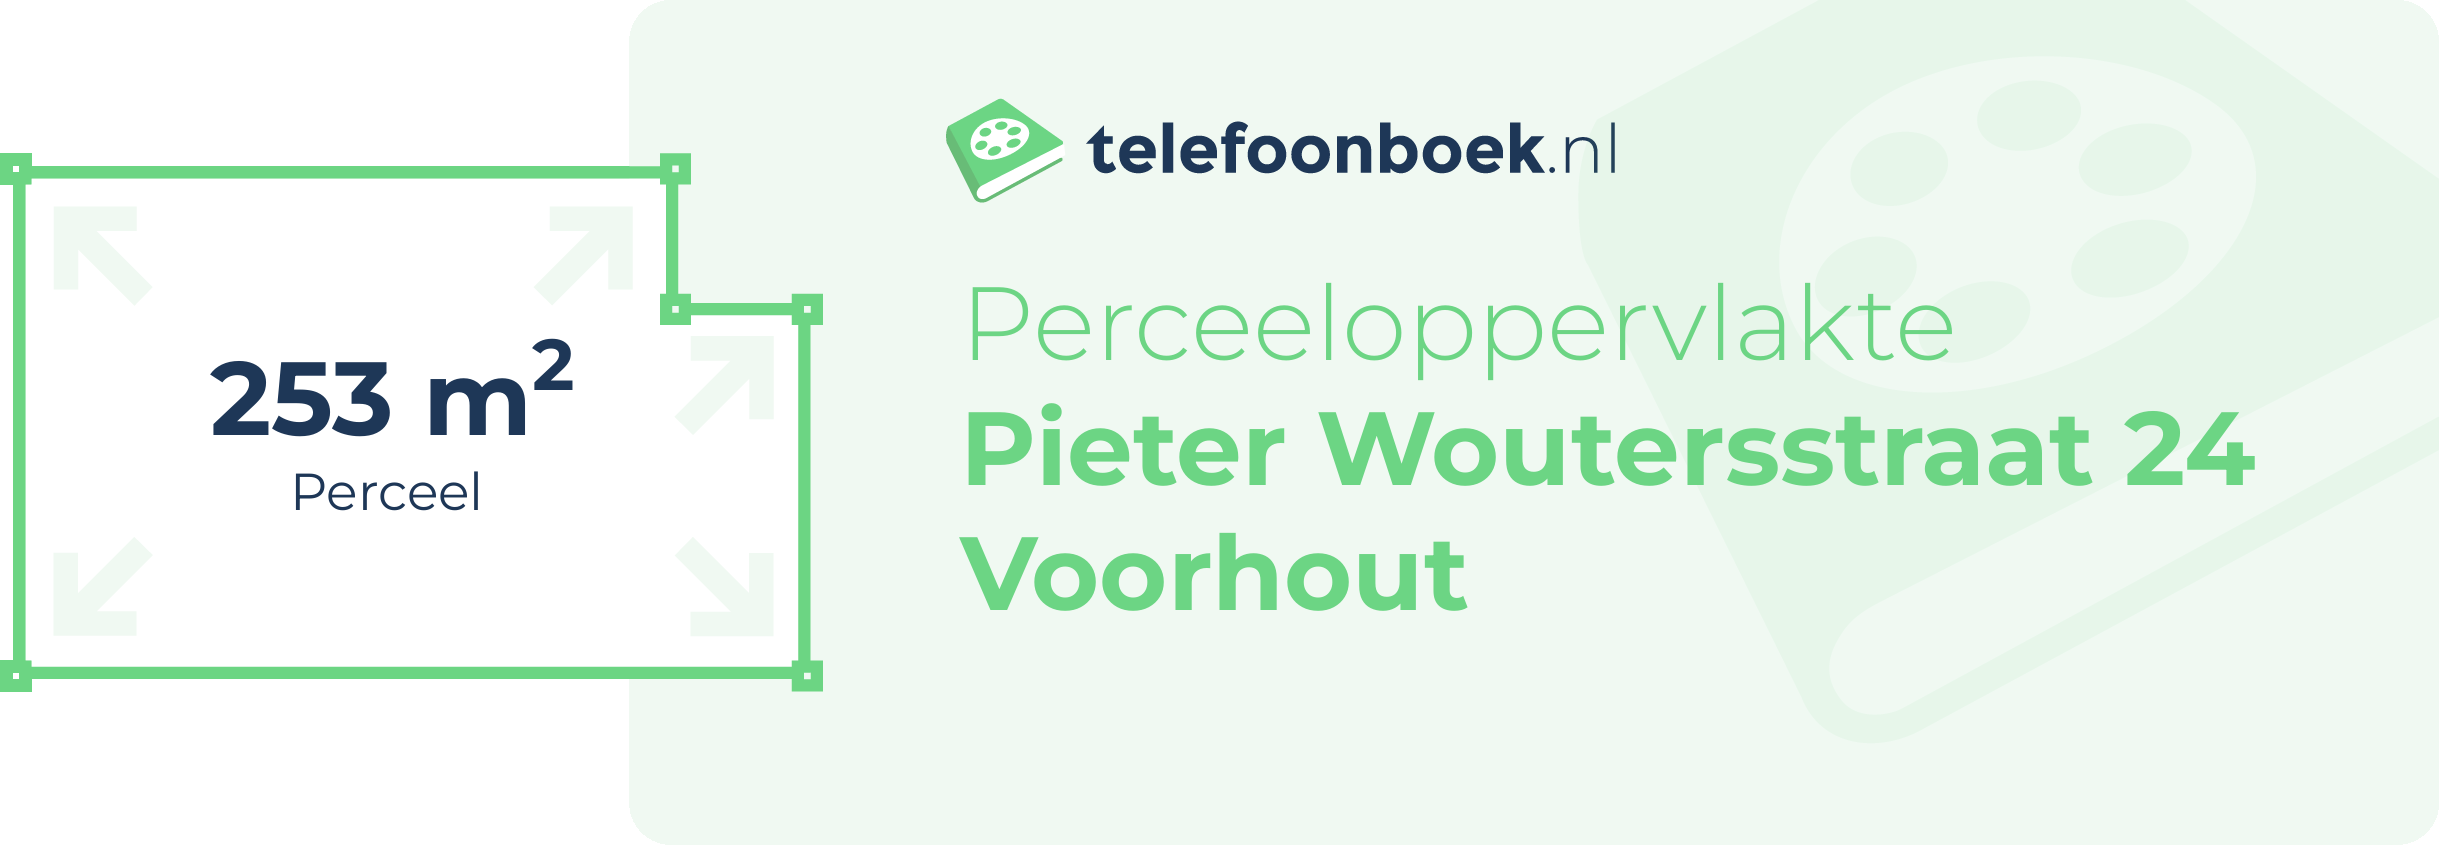 Perceeloppervlakte Pieter Woutersstraat 24 Voorhout